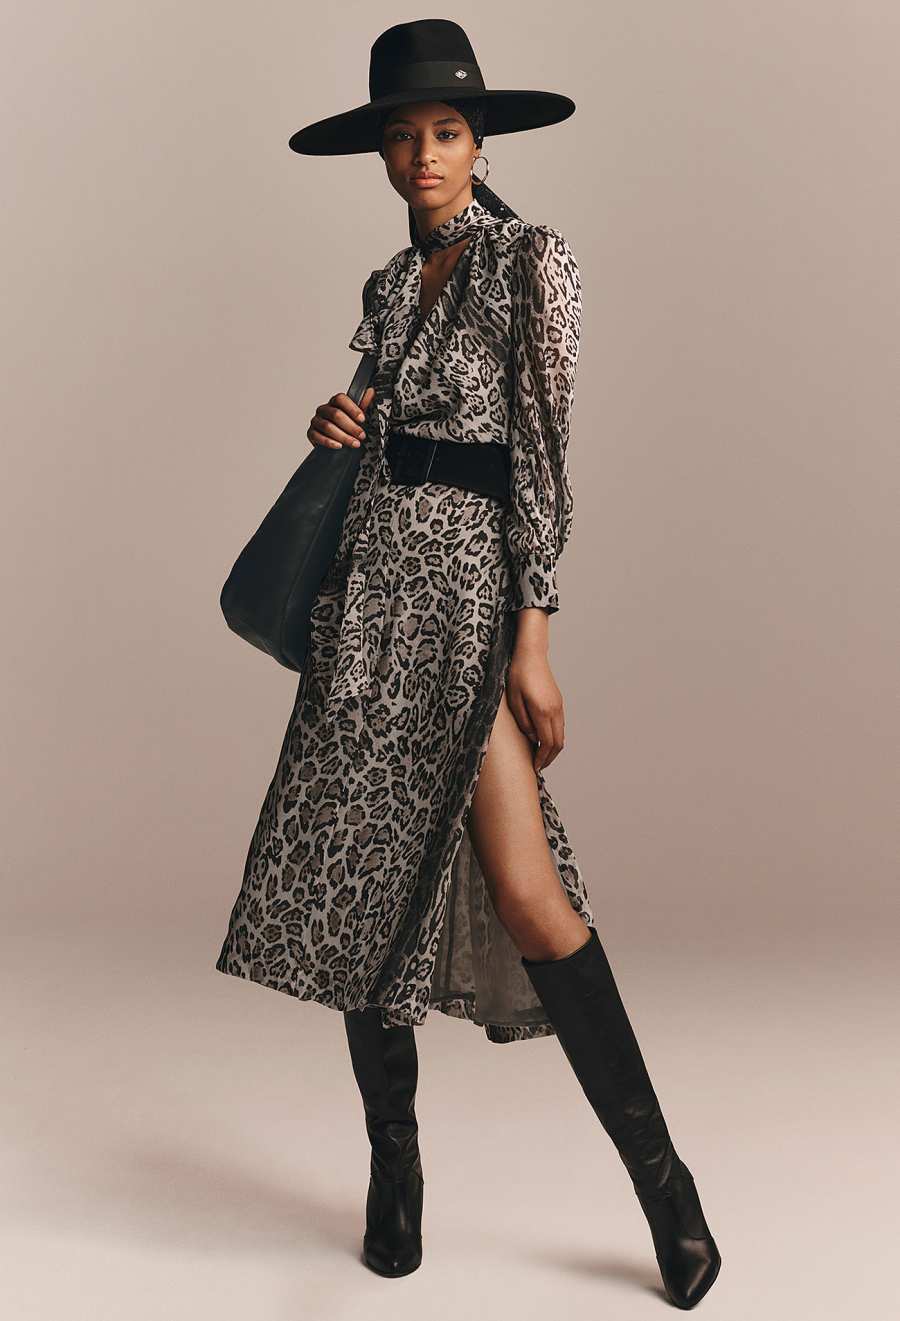 Zendaya x Tommy Hilfiger Collection - Zendaya Snow Leopard Print Dress